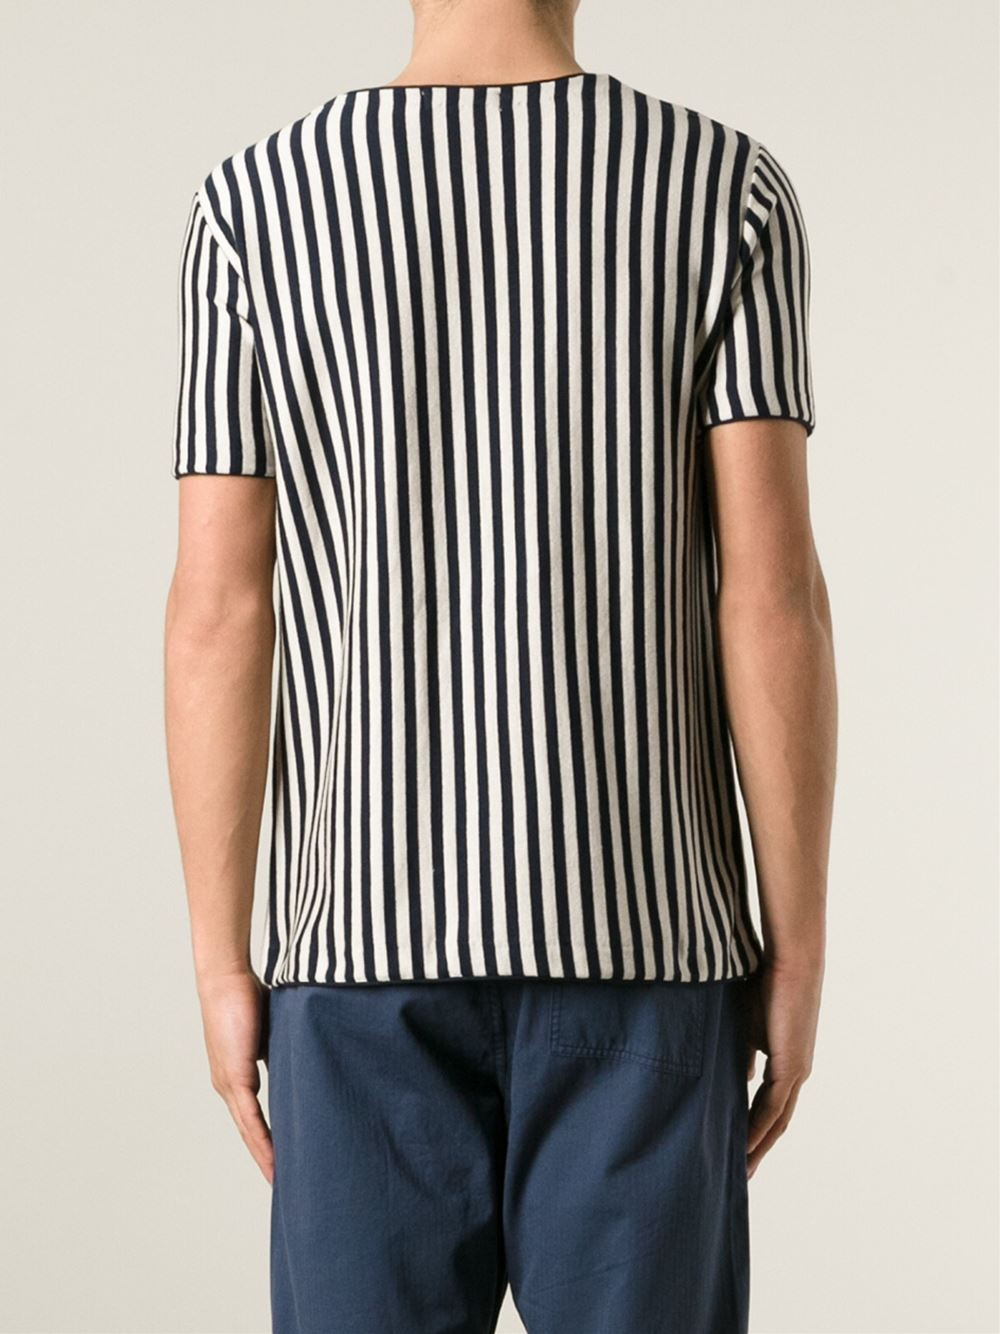 ymc blue vertical stripes t shirt product 1 27841759 2 825946691 normal